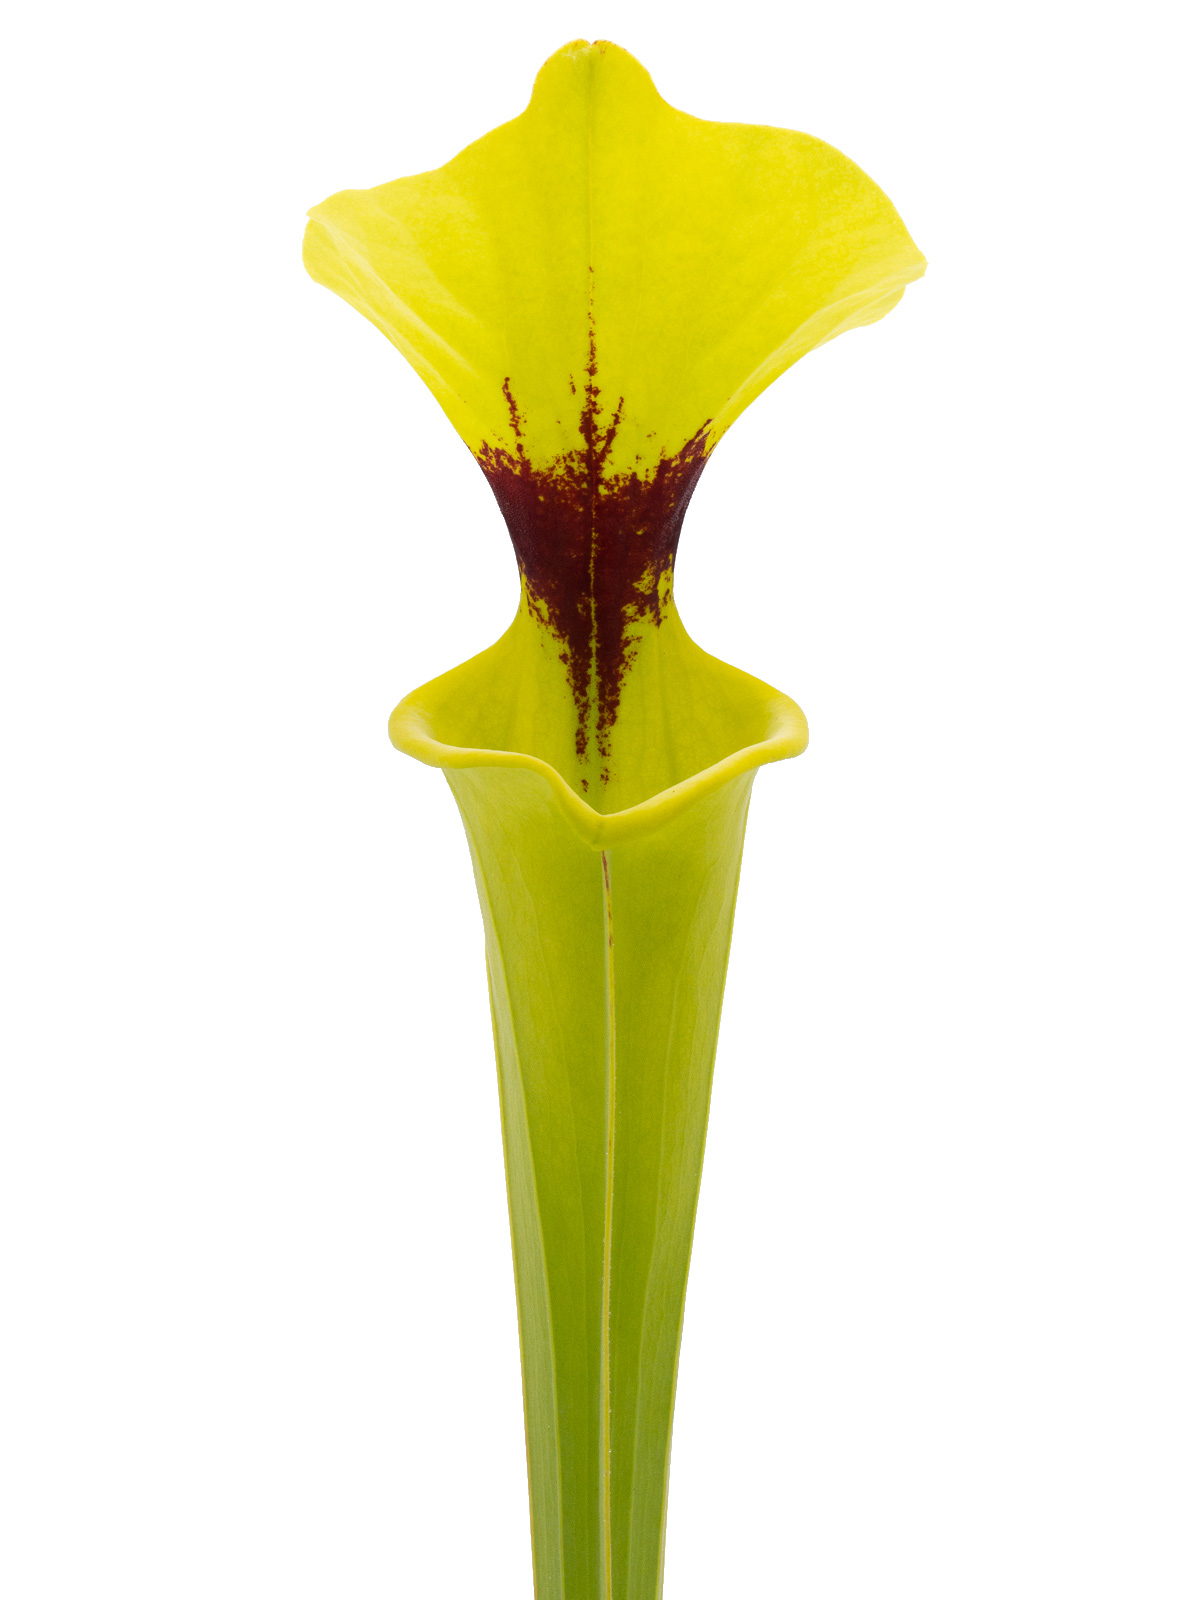 Sarracenia flava var. rugelii - MK F146, large pitcher